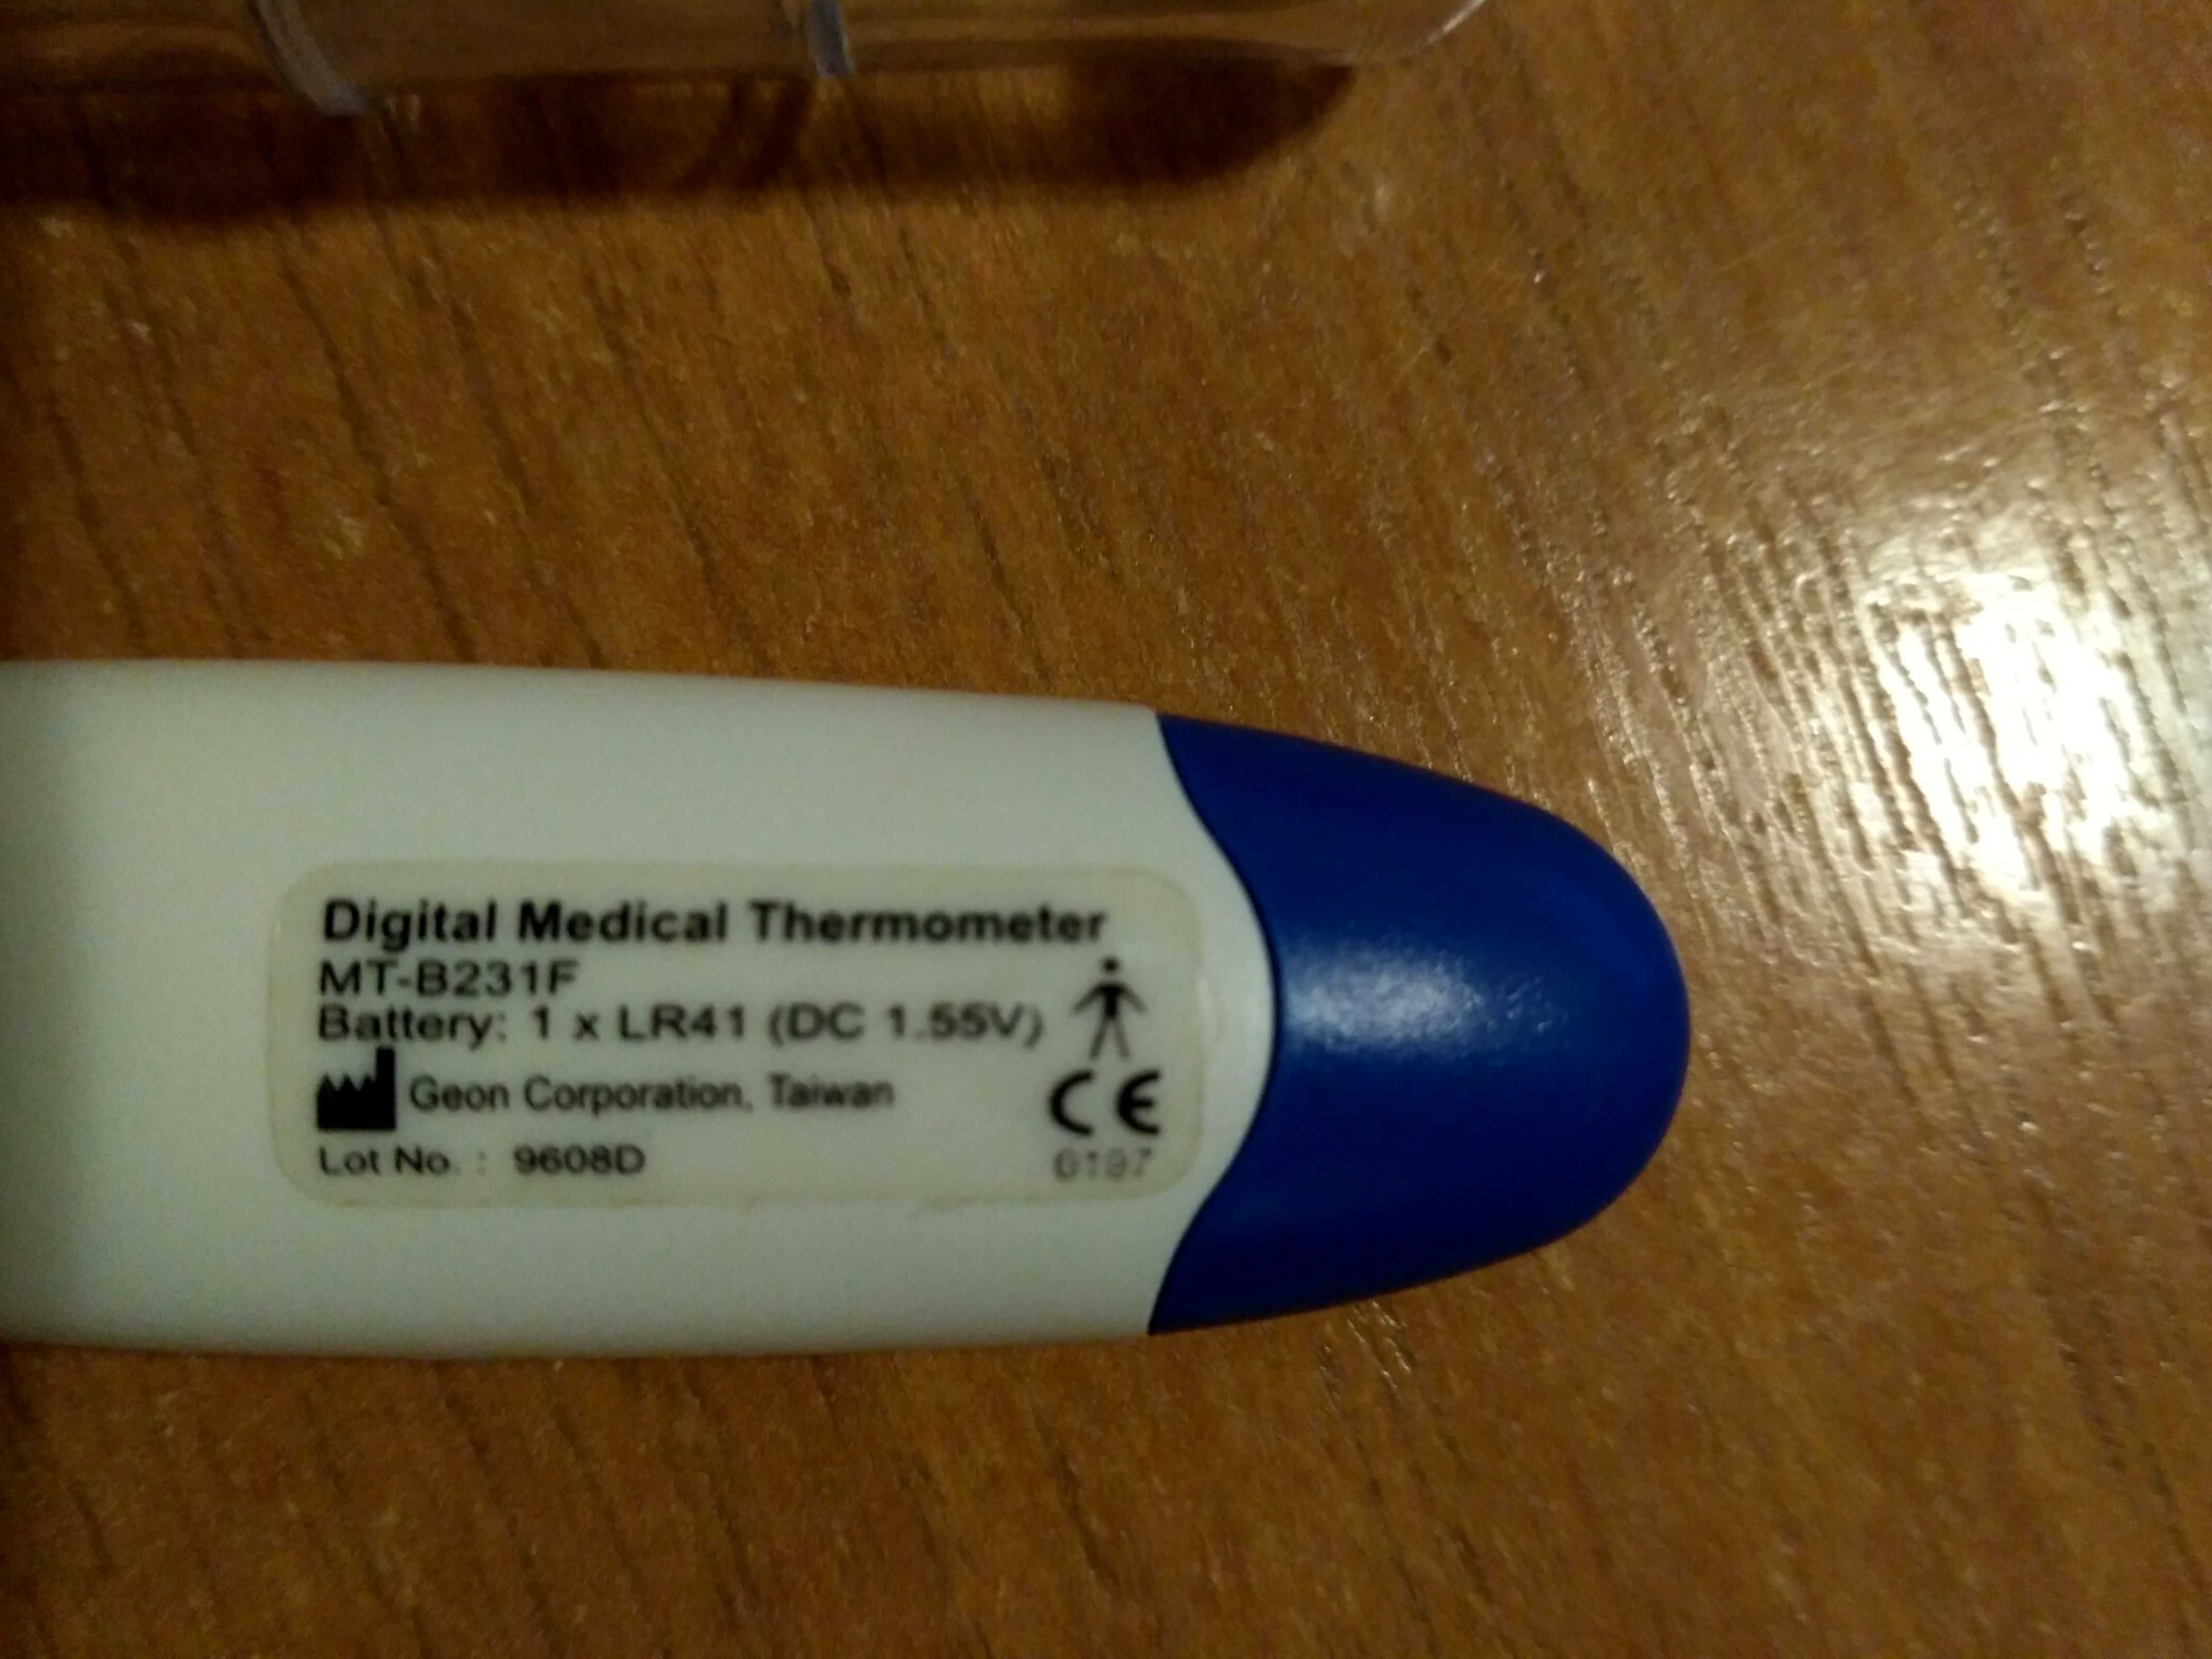 Термометр медицинский цифровой